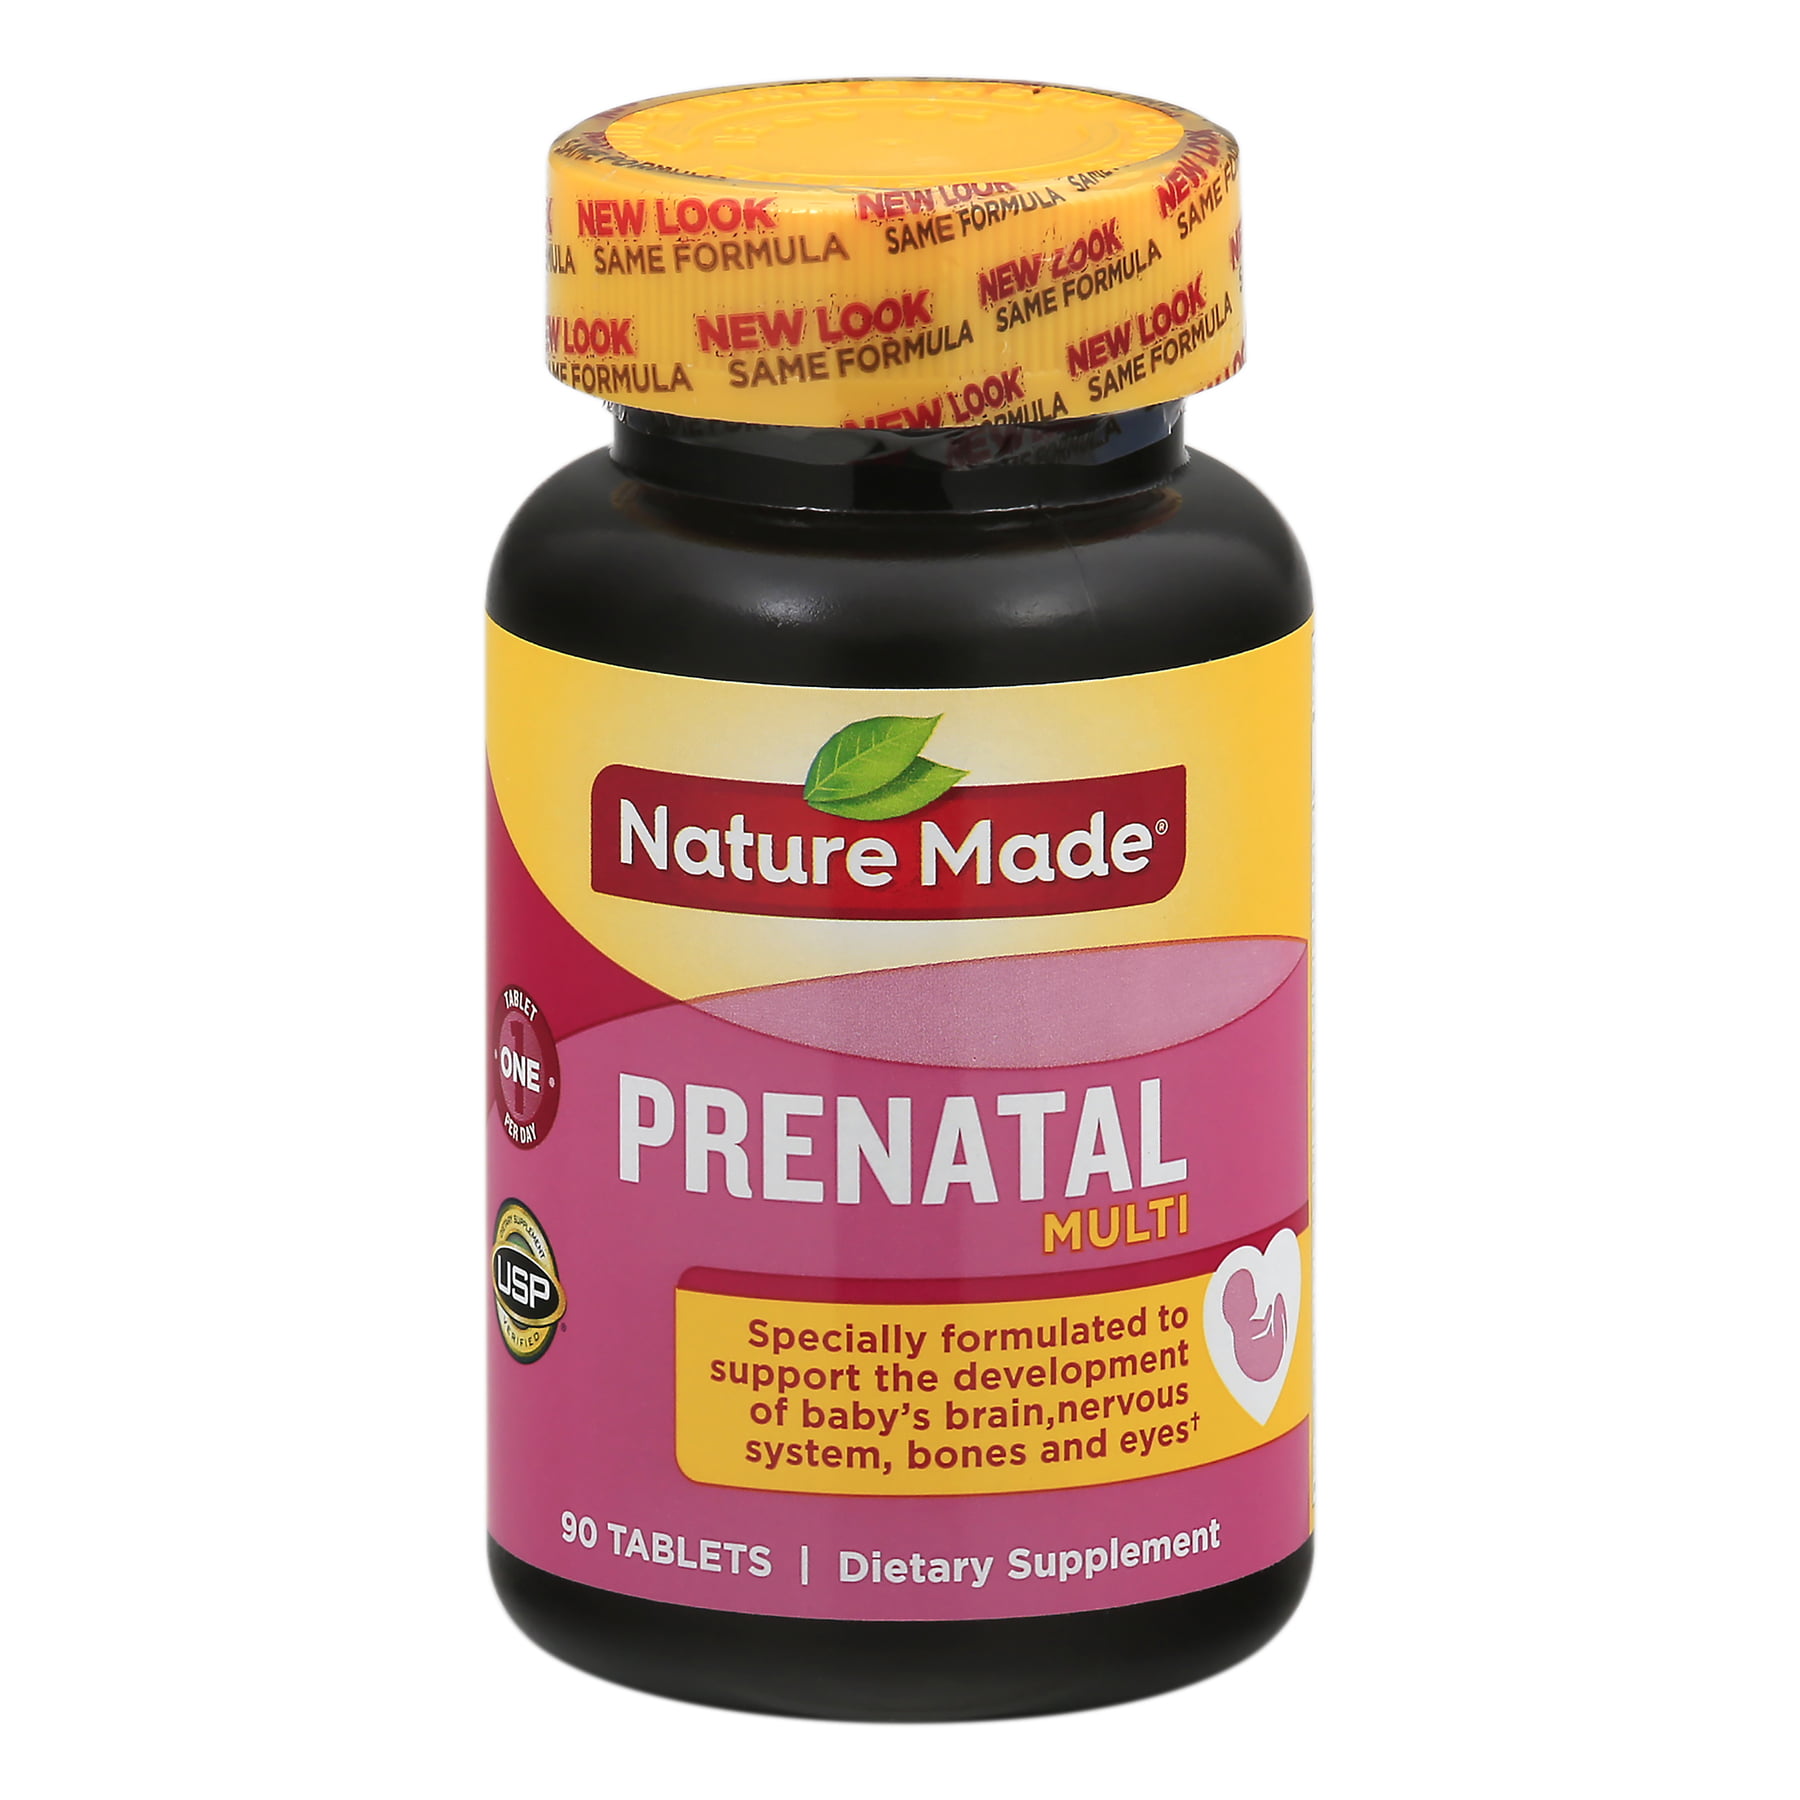 Nature Made Prenatal Multi Tablets Jar 900 Ct